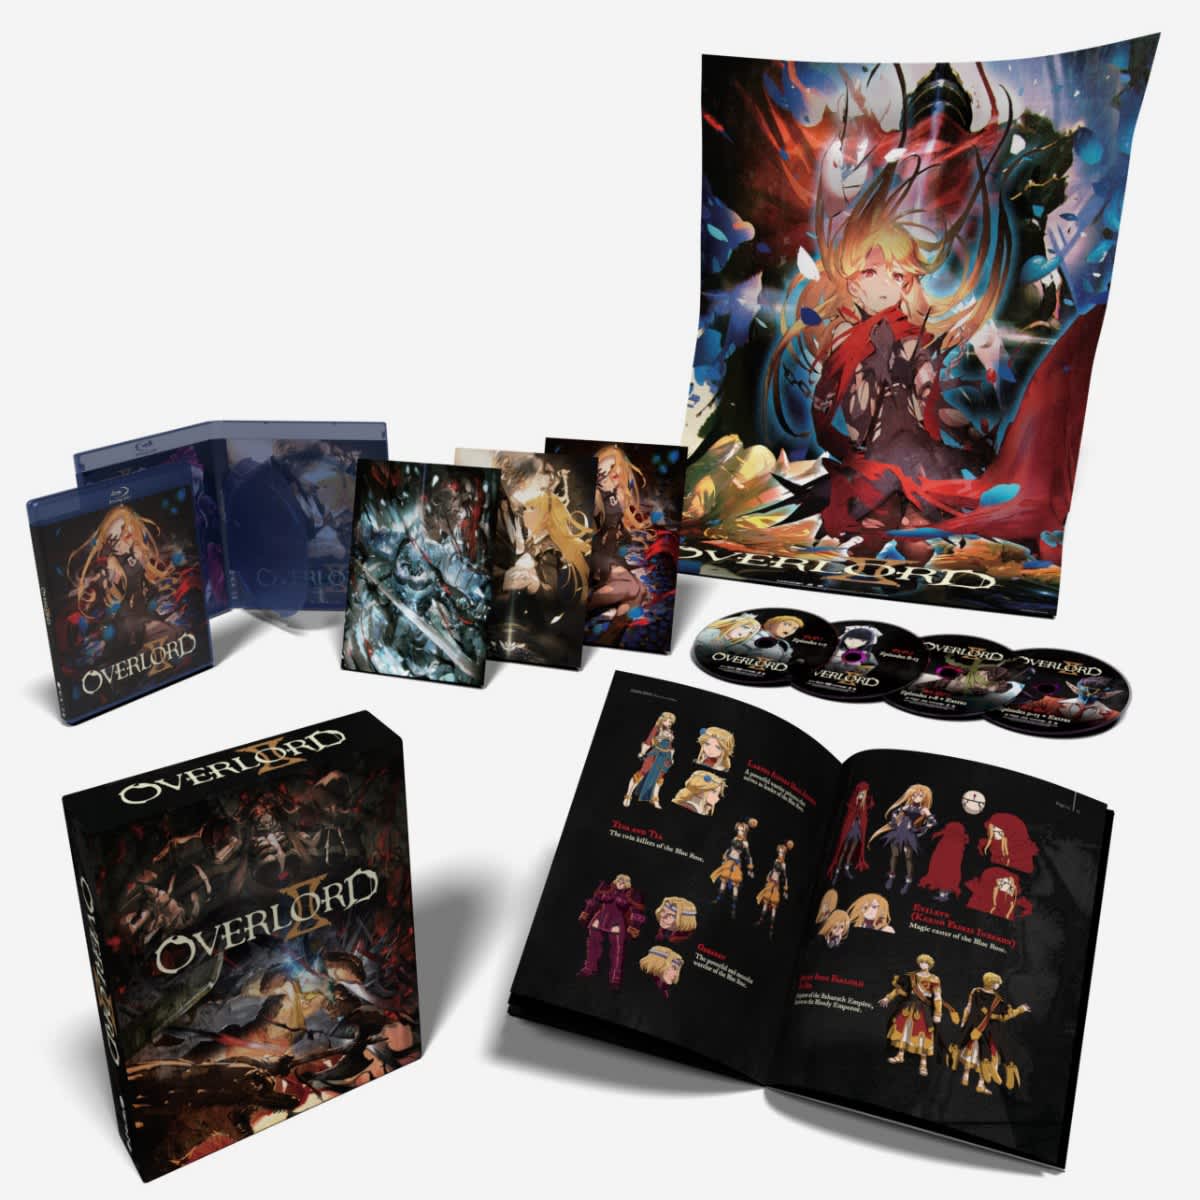 Overlord II - Season 2 Limited Edition Blu-Ray/DVD image count 1